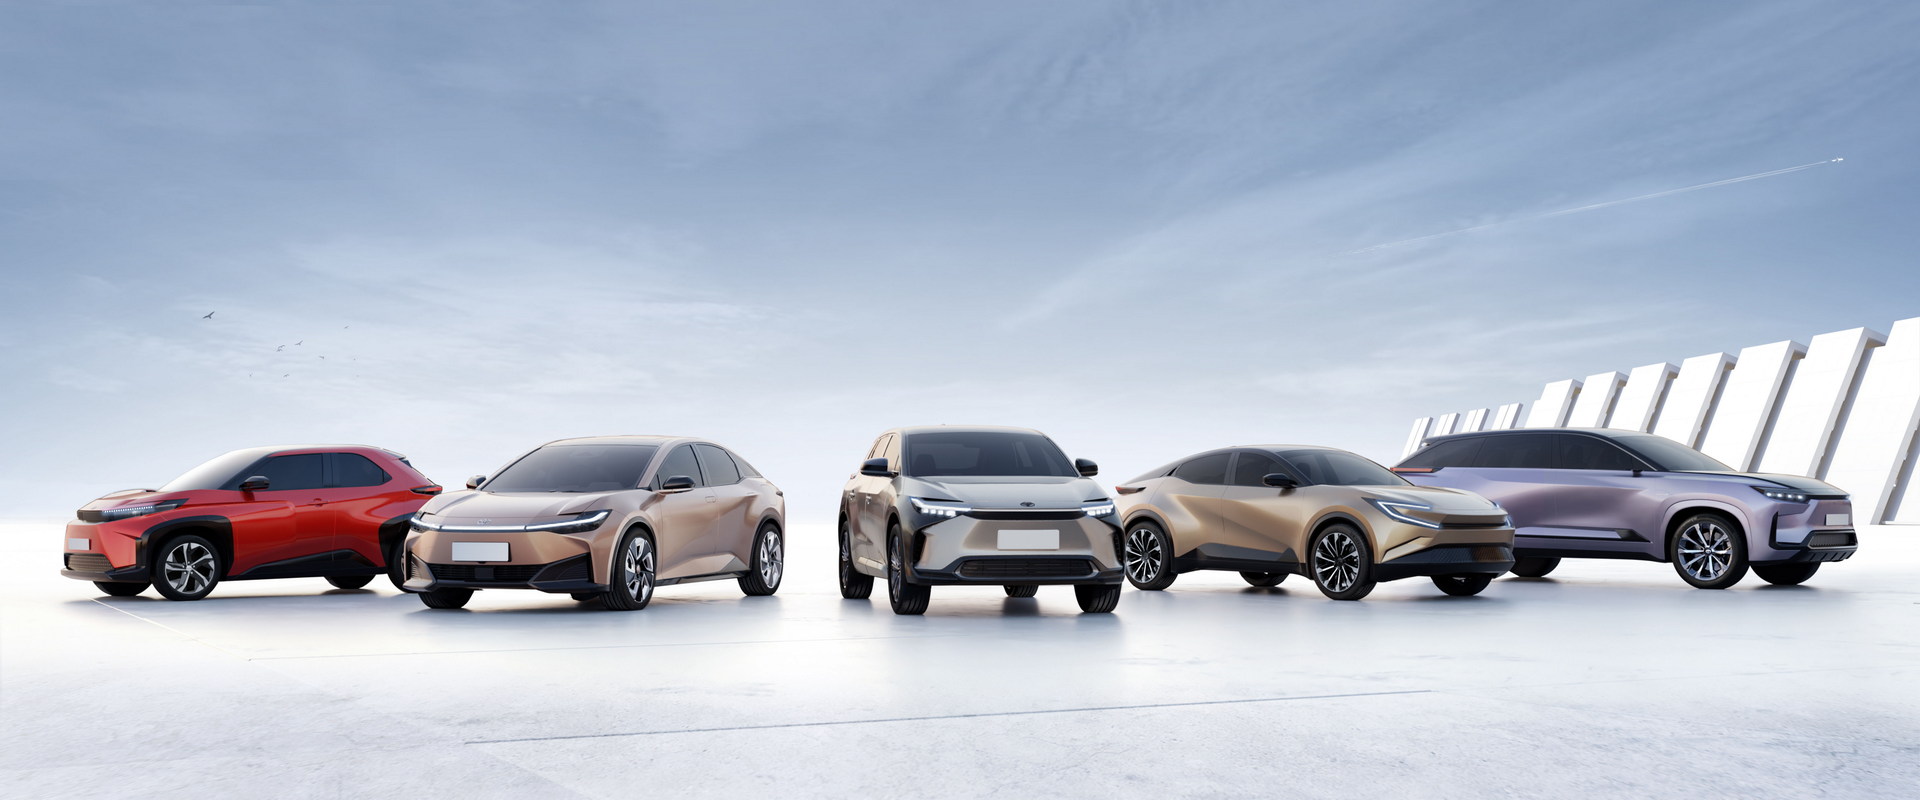 Toyota-and-Lexus-EV-Concepts-11